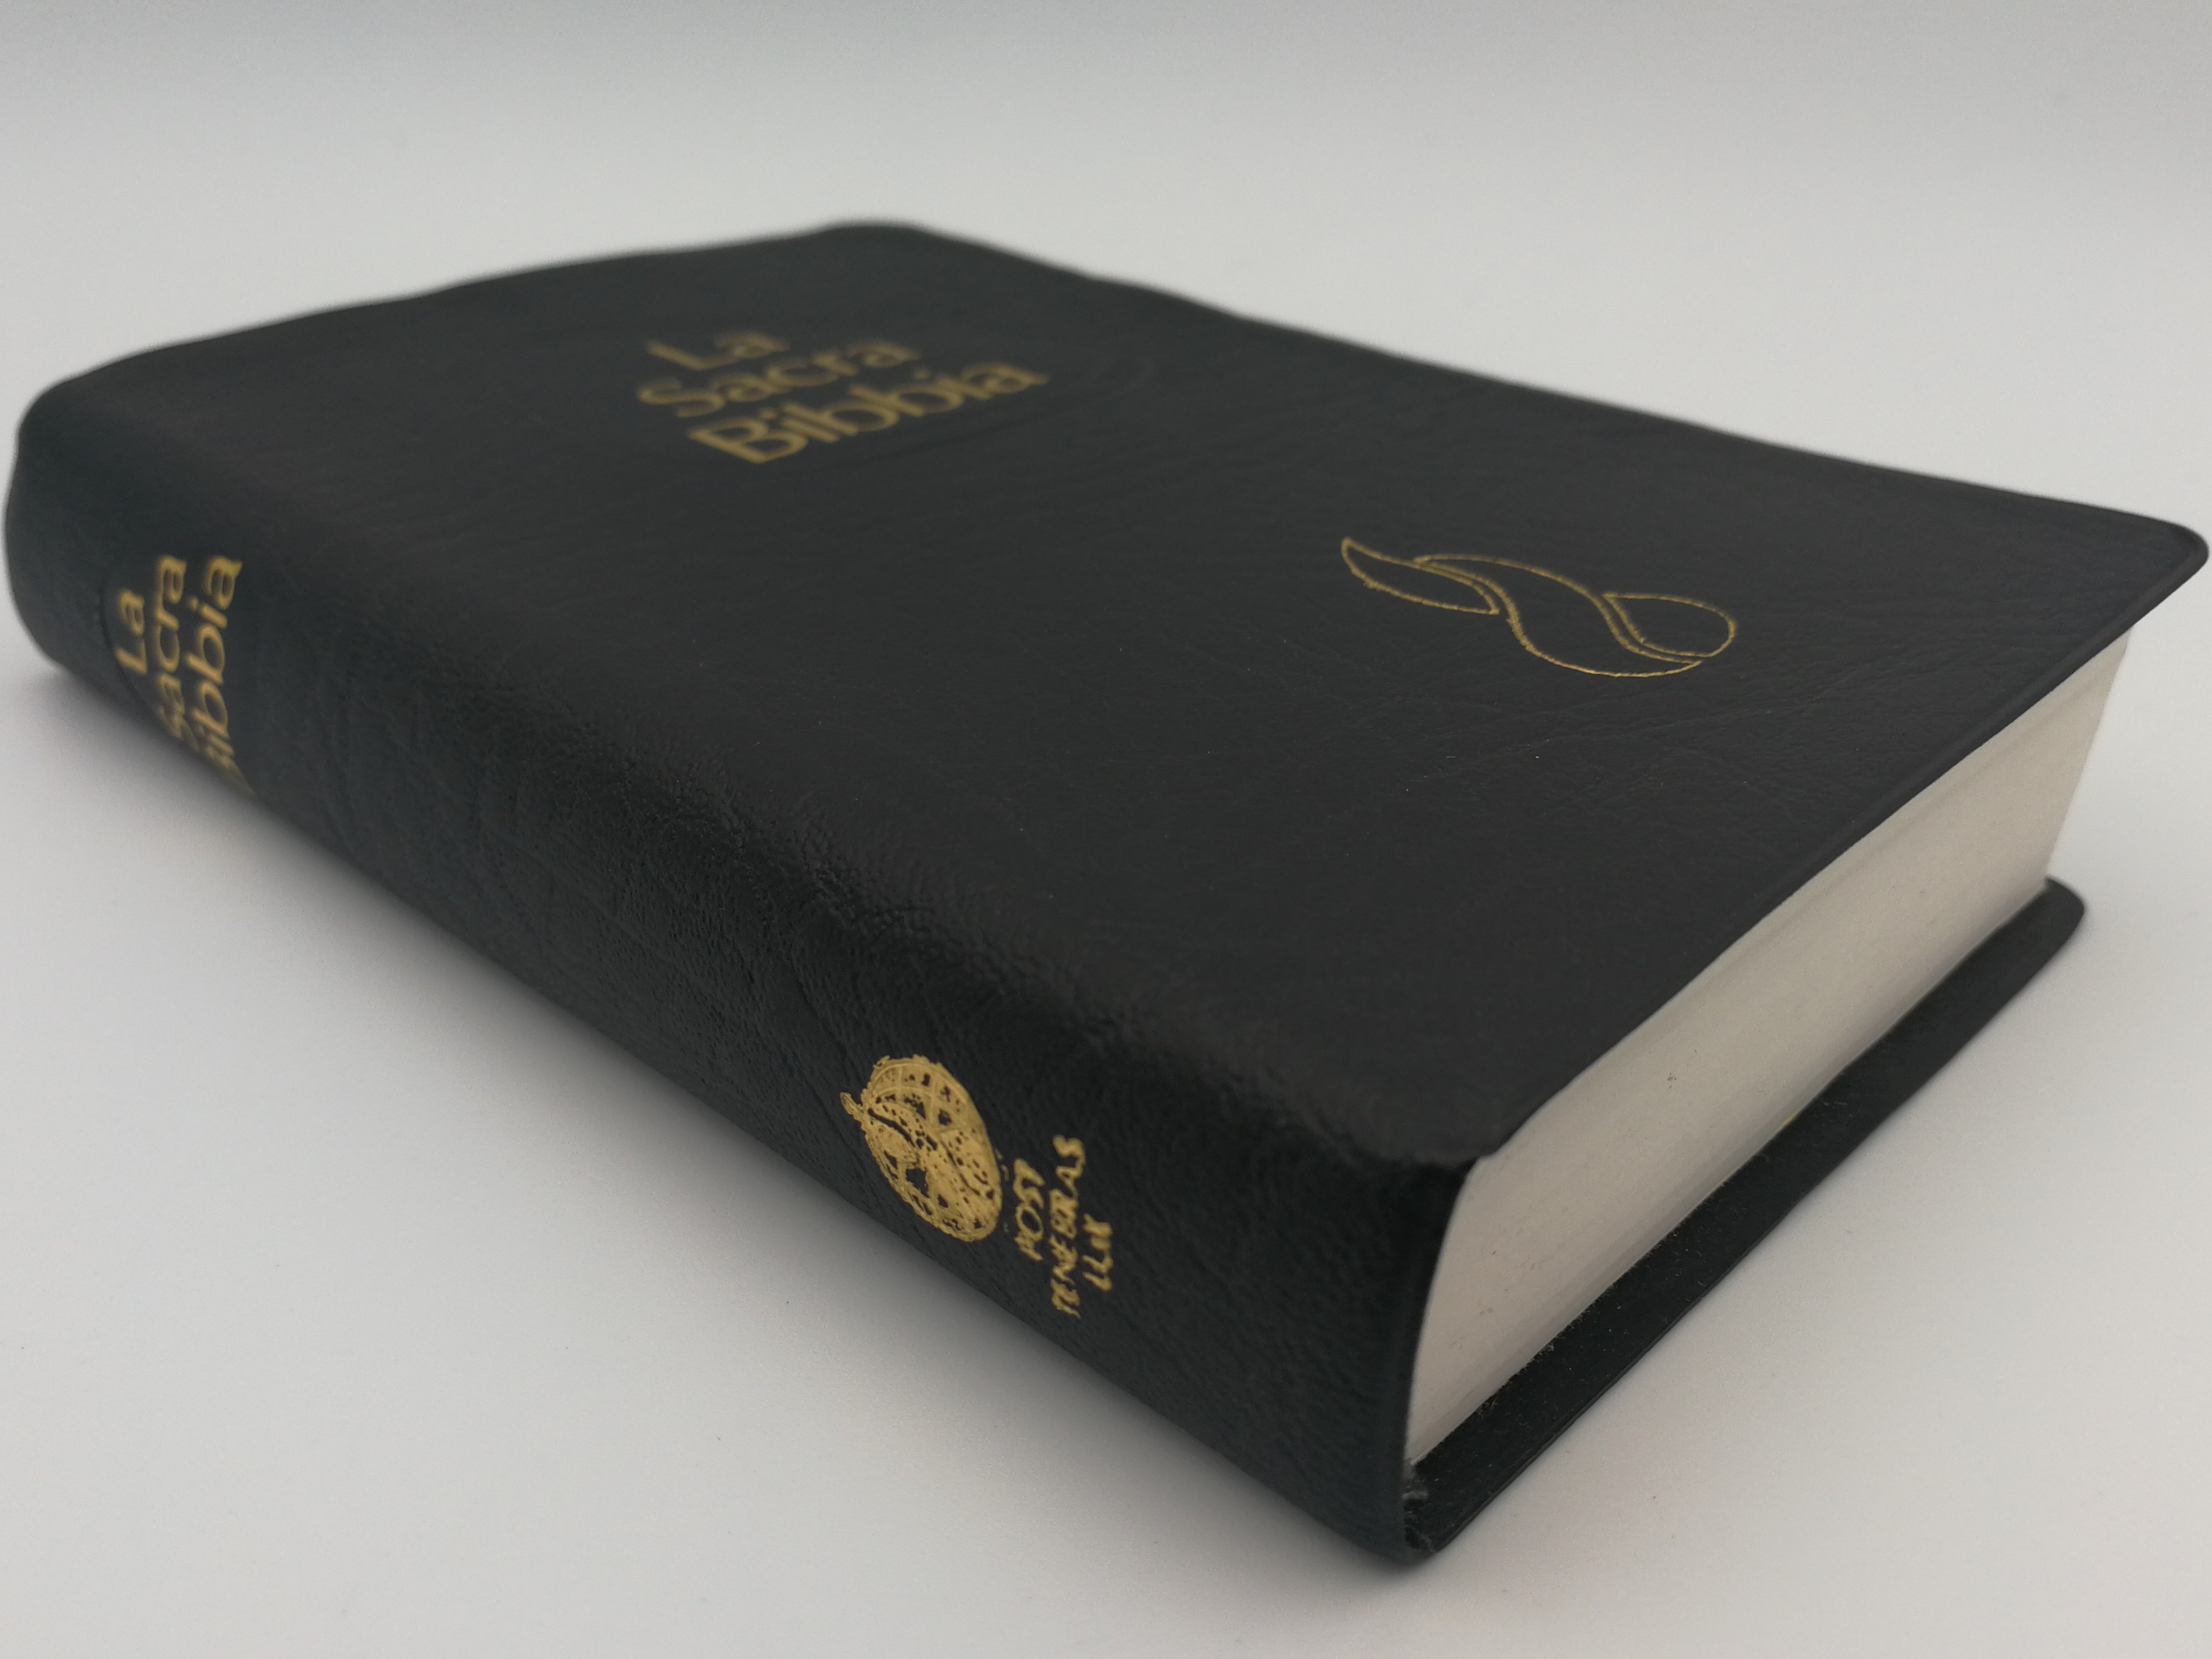 La Sacra Bibbia - Italian Holy Bible - 1994 New Revised version